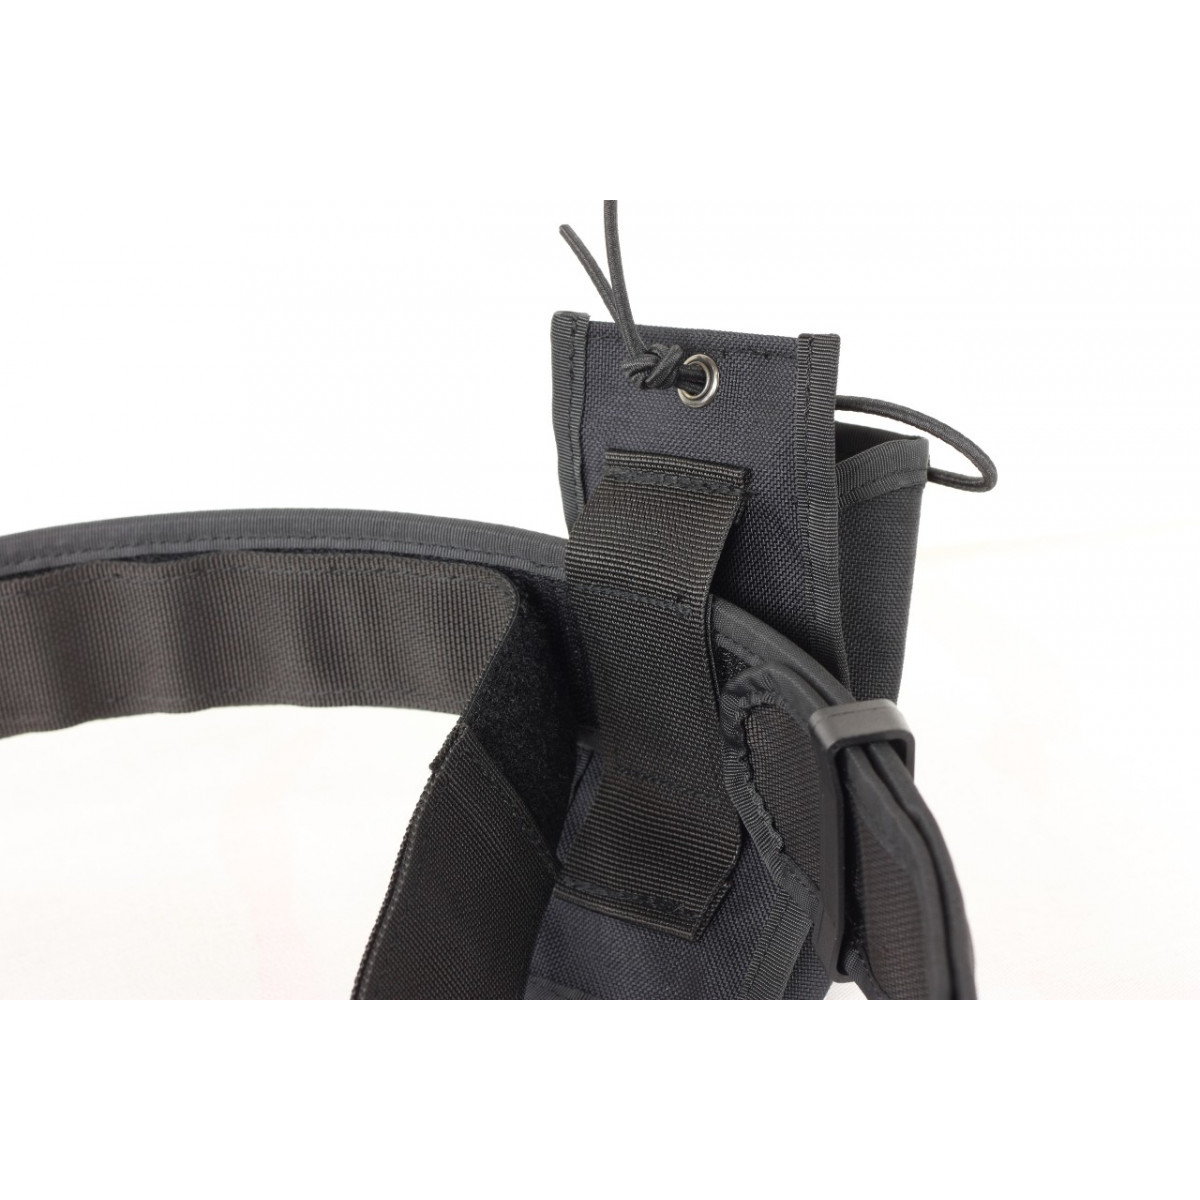 Duty belt SET duty belt 50 mm for police and emergency forces